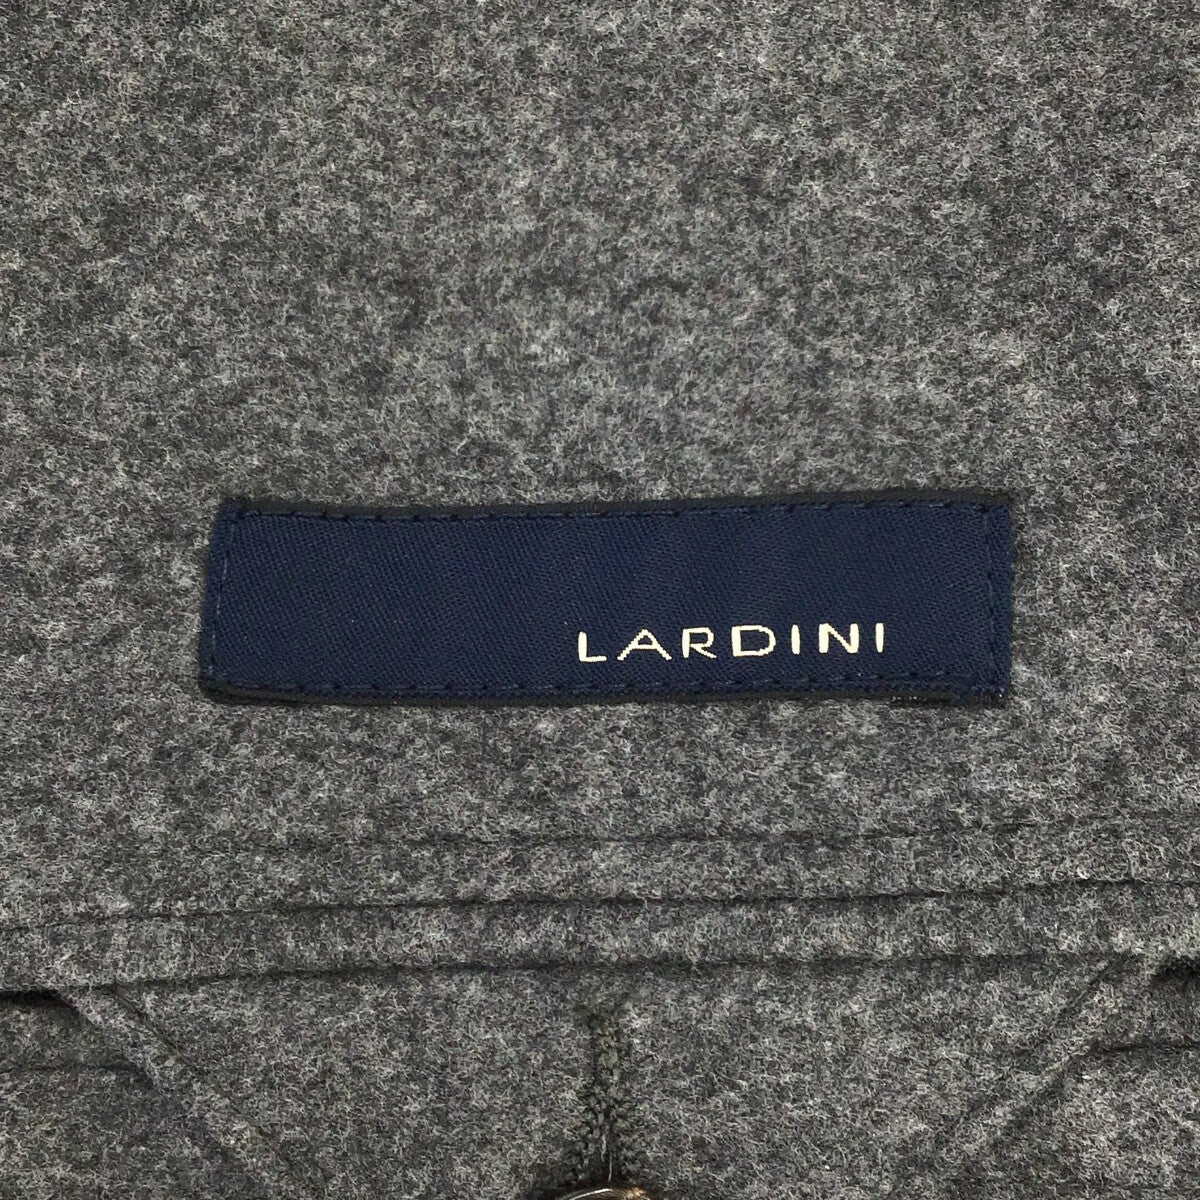 LARDINI / ラルディーニ | フラノウール 3B テーラードジャケット | 52 | グレー | メンズ